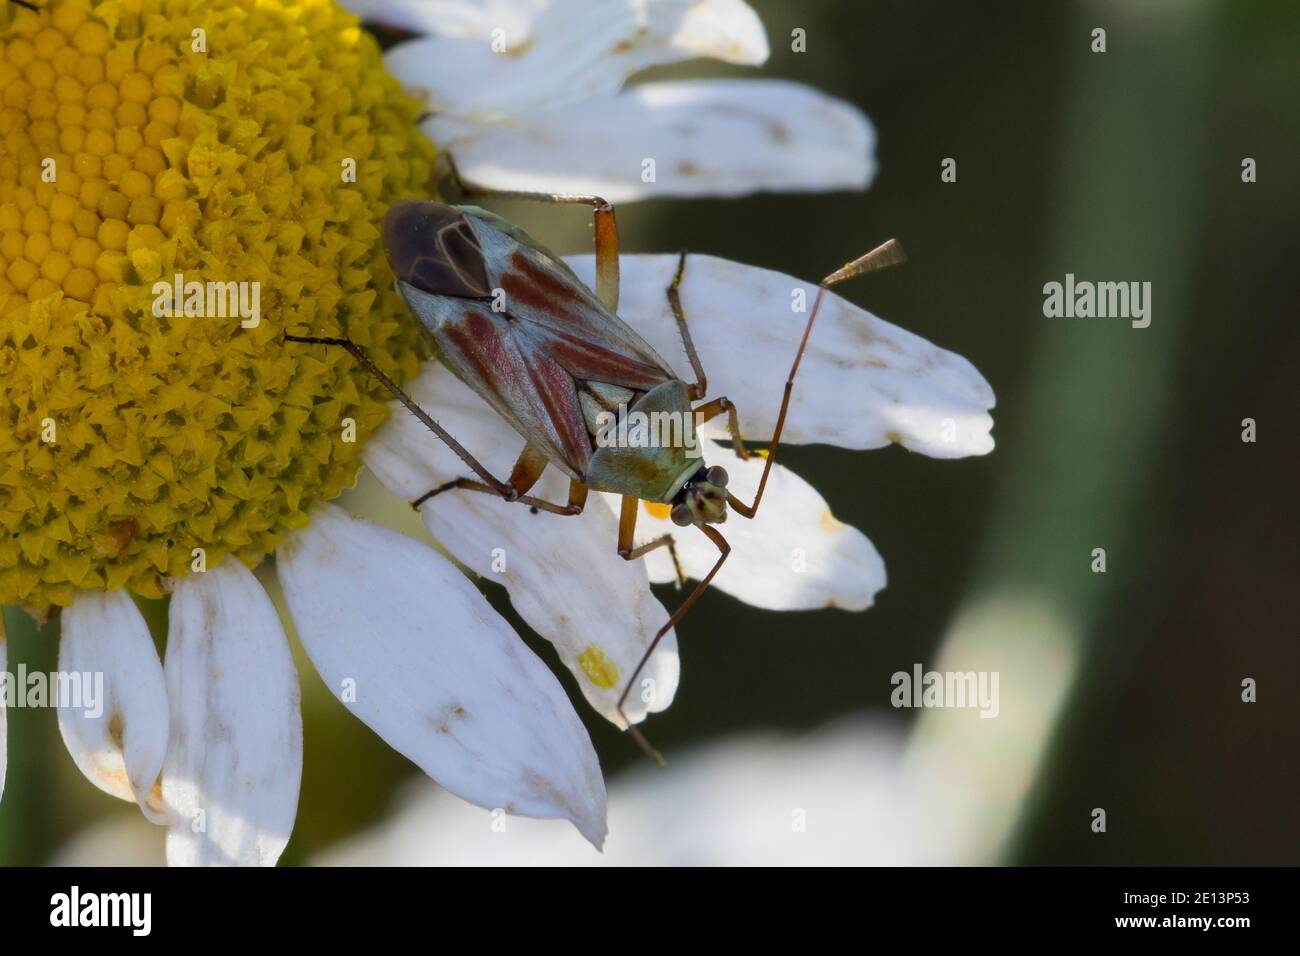 Rotgefleckte Weichwanze, Calocoris roseomaculatus, Weichwanze, Weichwanzen, Miridae, Plant Bugs Stock Photo